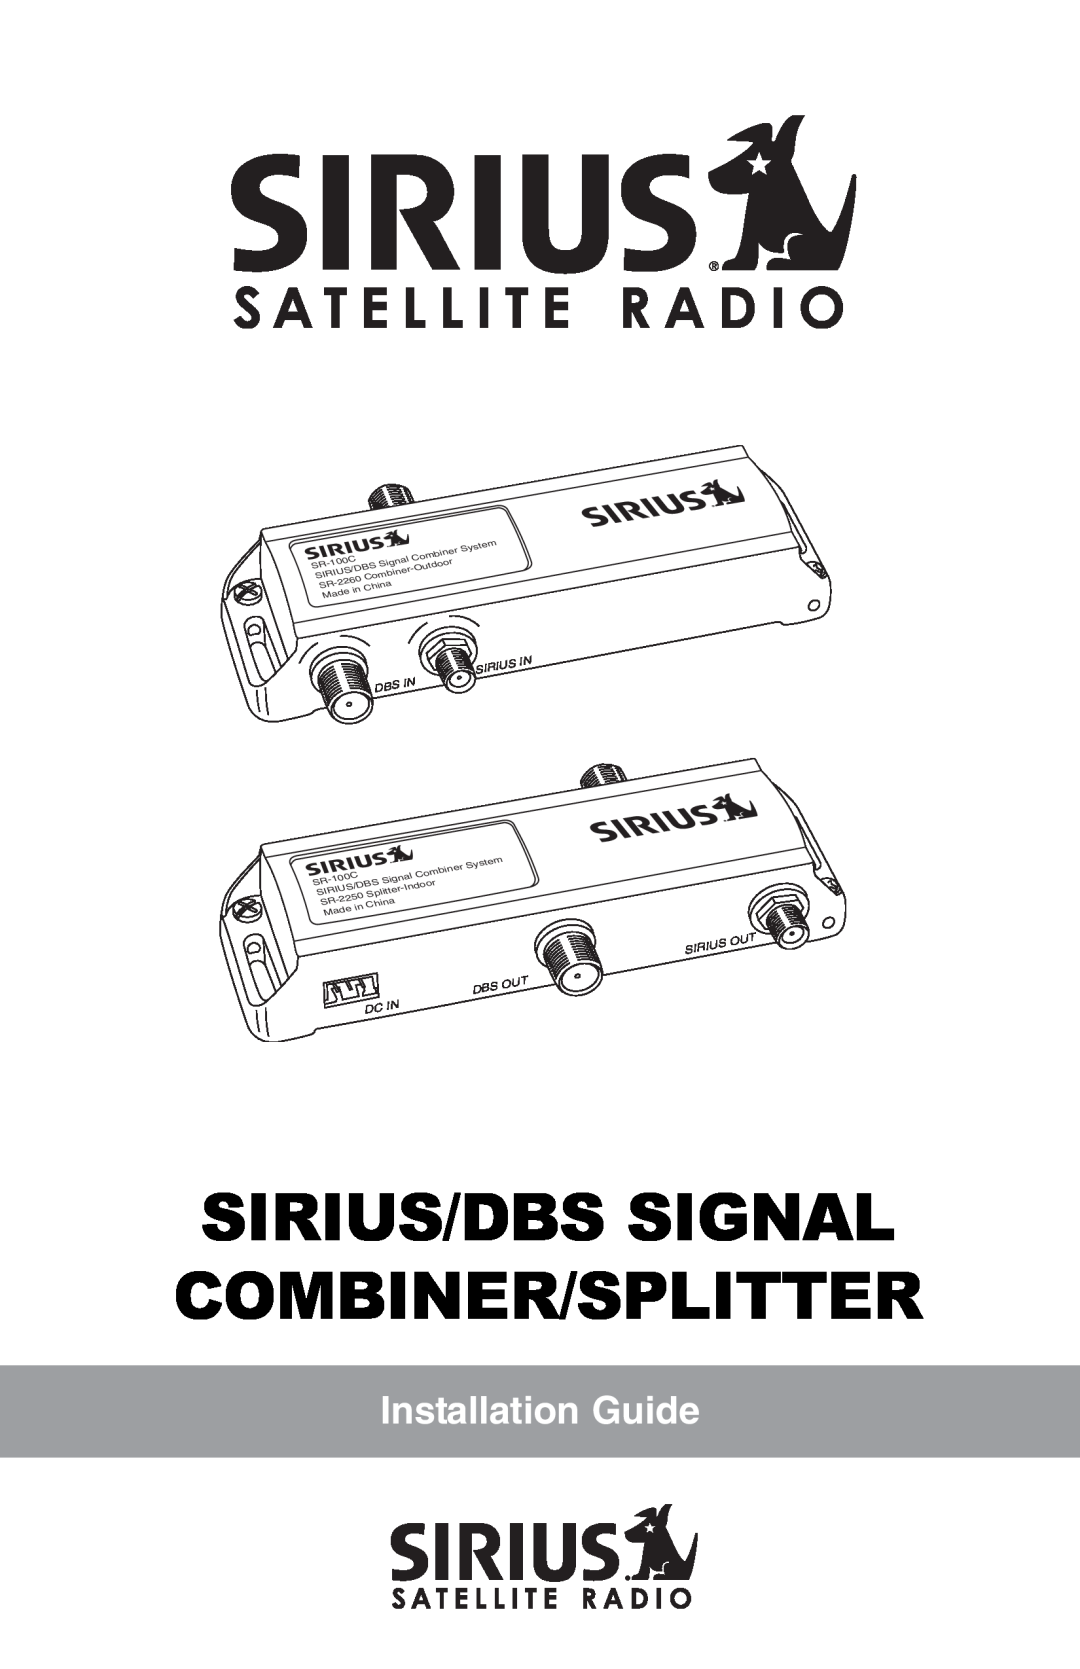 Sirius Satellite Radio SR-100C manual Sirius/Dbs Signal Combiner/Splitter, Installation Guide 